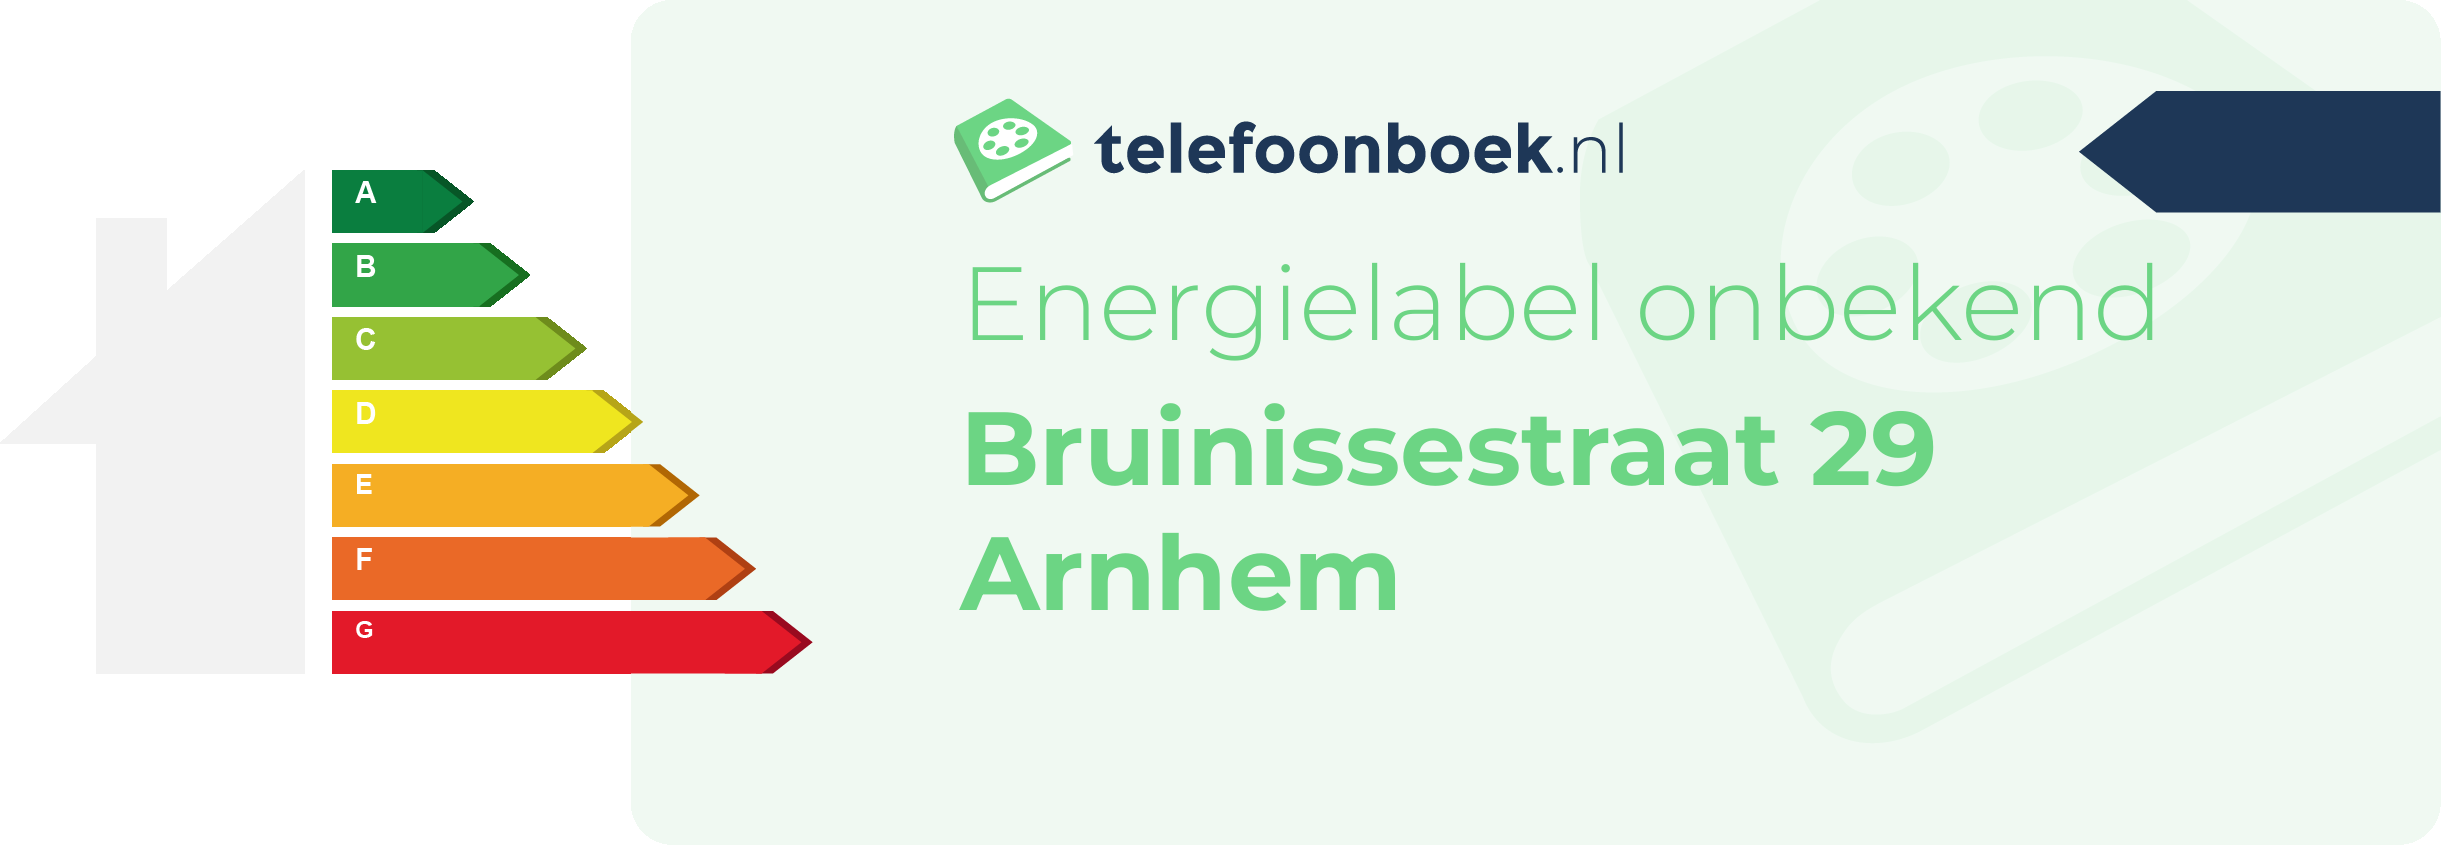 Energielabel Bruinissestraat 29 Arnhem